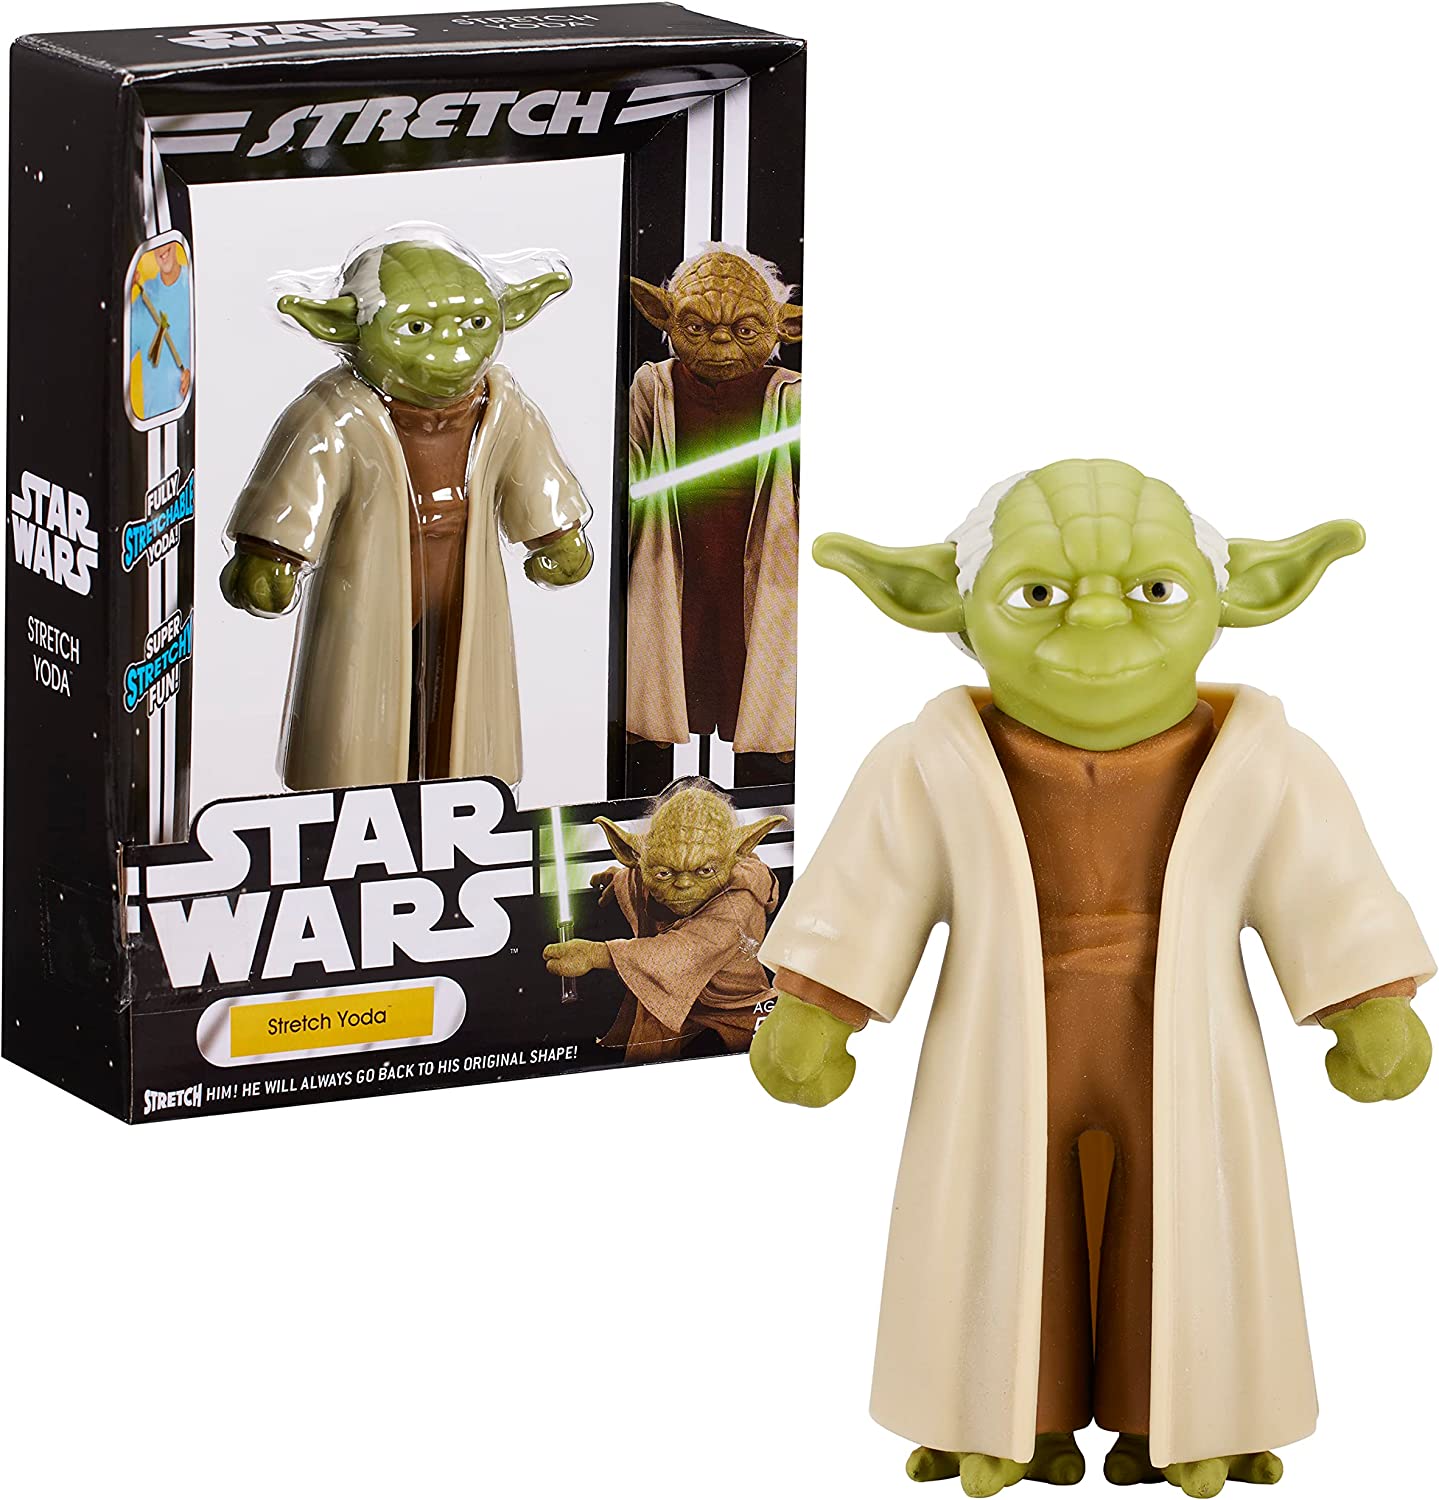 Stretch YODA Star Wars Toy Fully Stretchable Figure